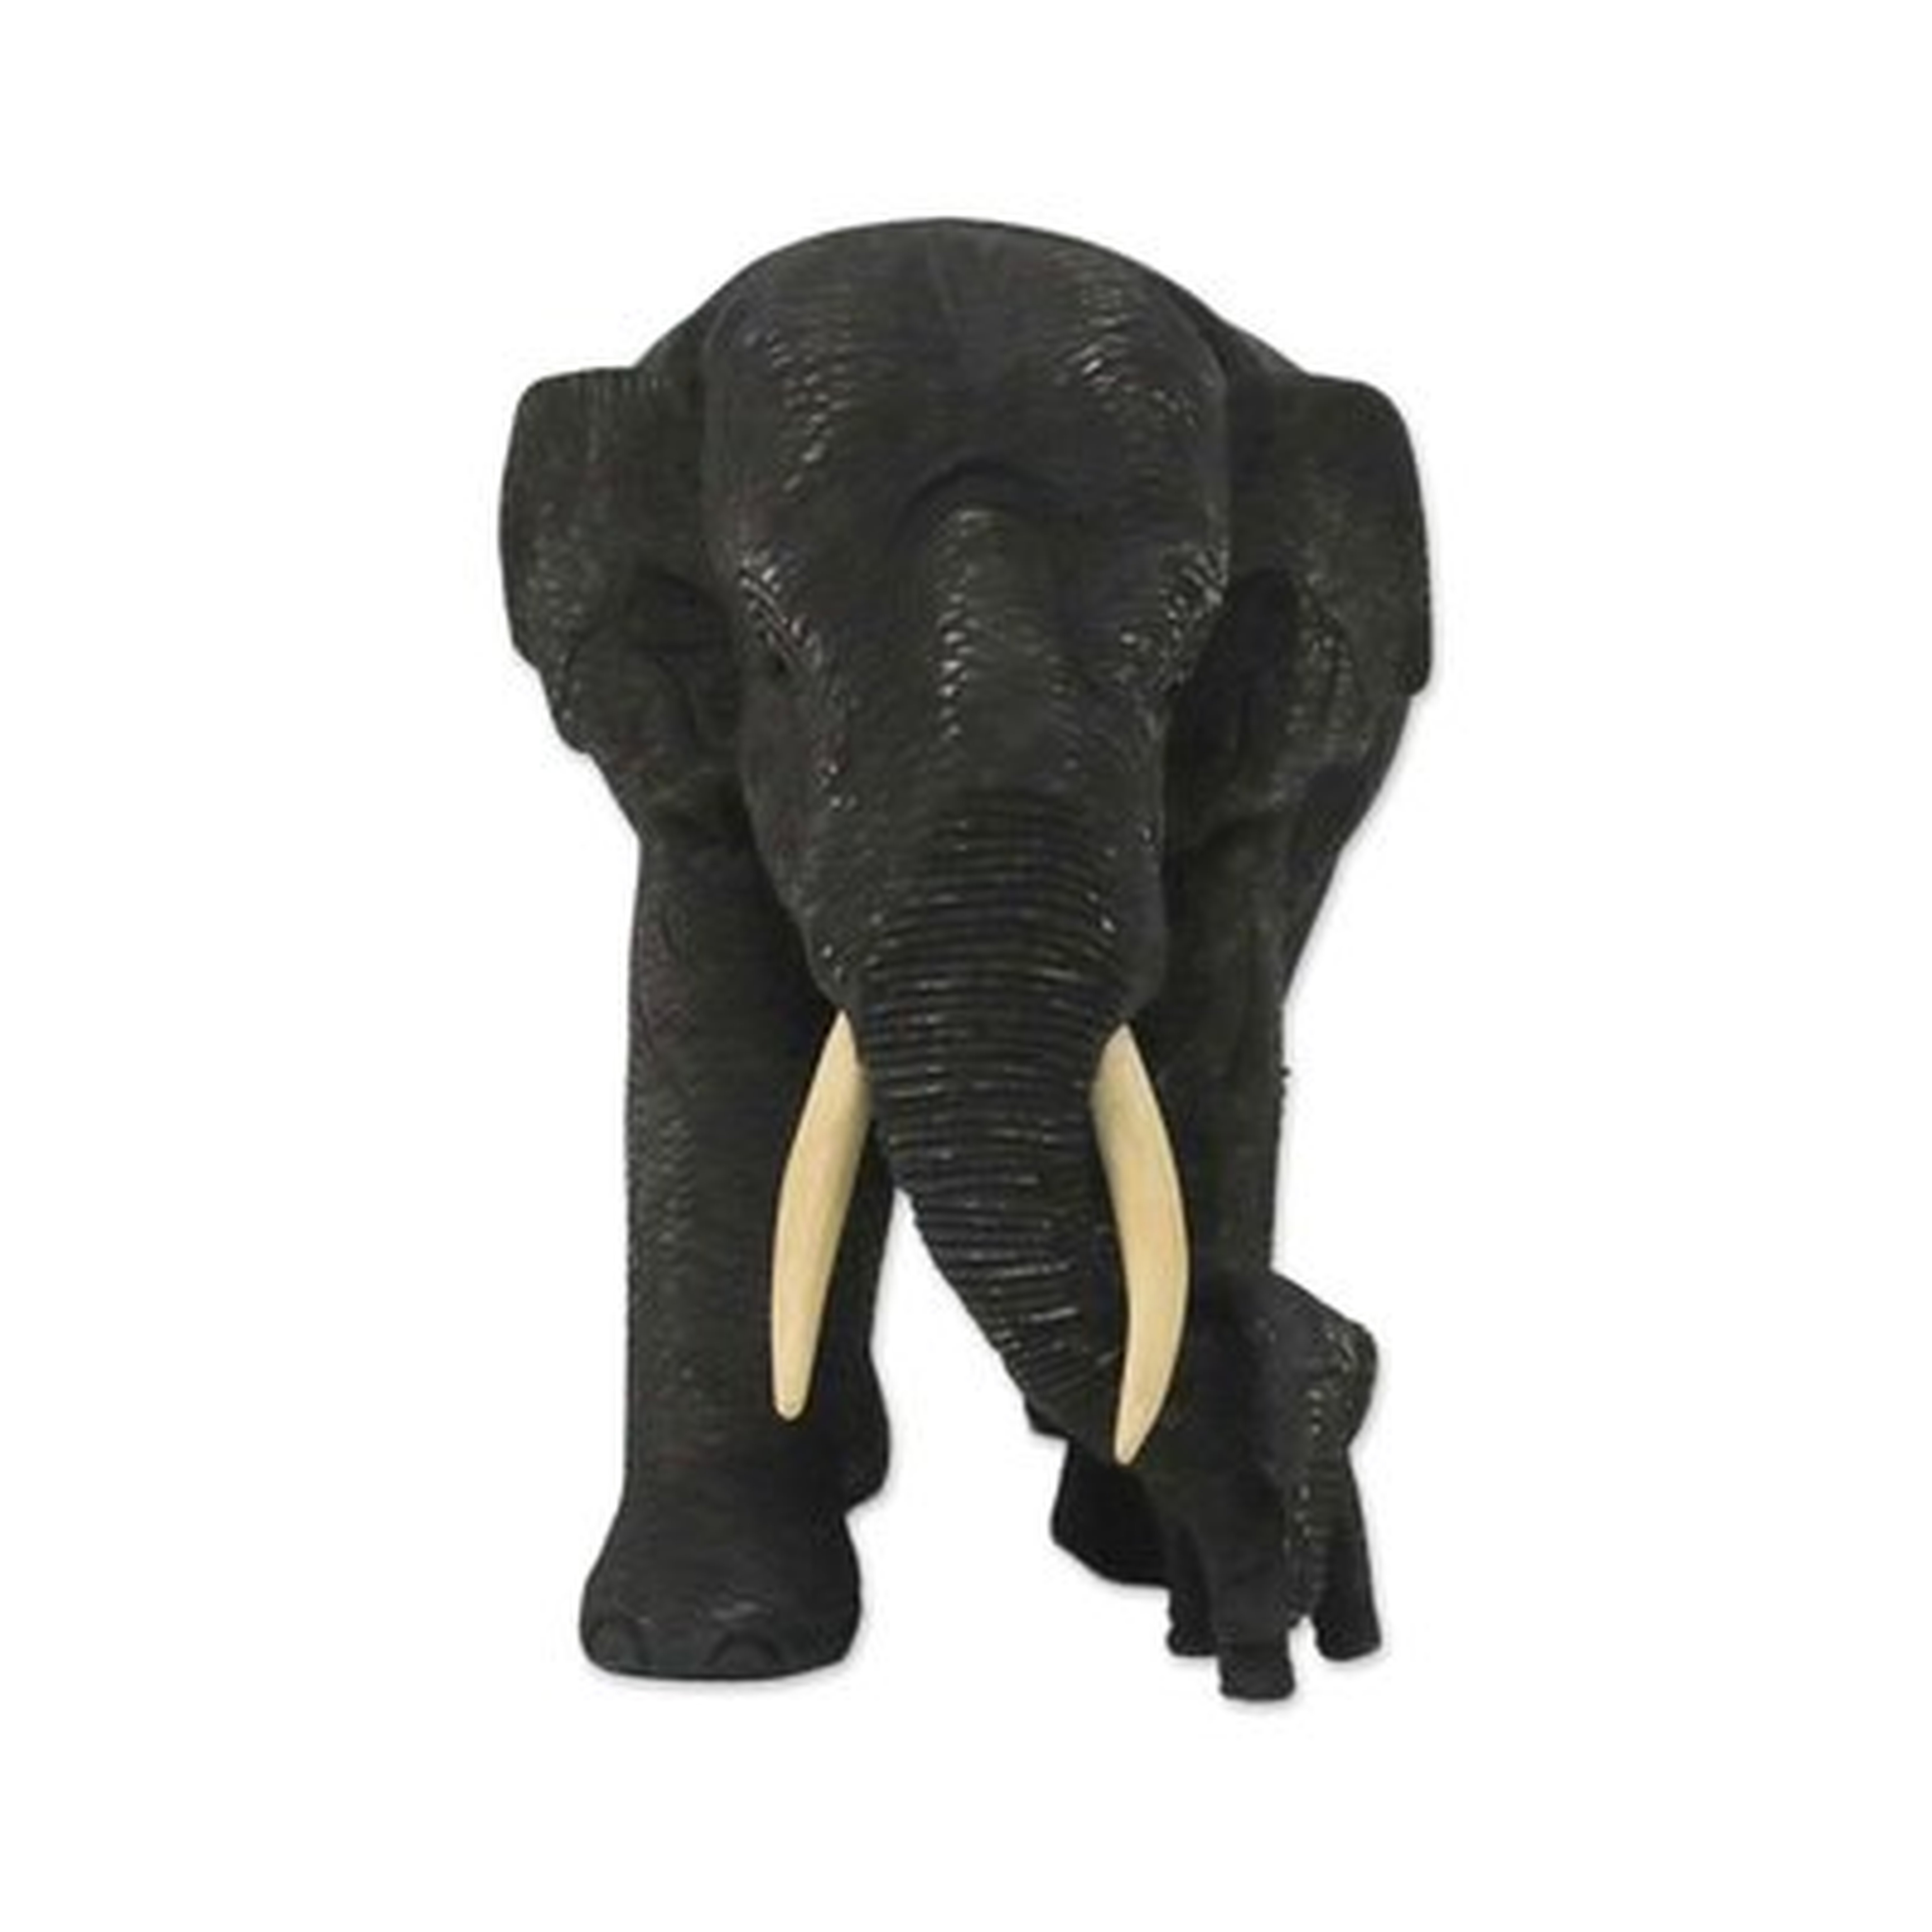 Wedgewood Heading Home Elephant Figurine - Wayfair